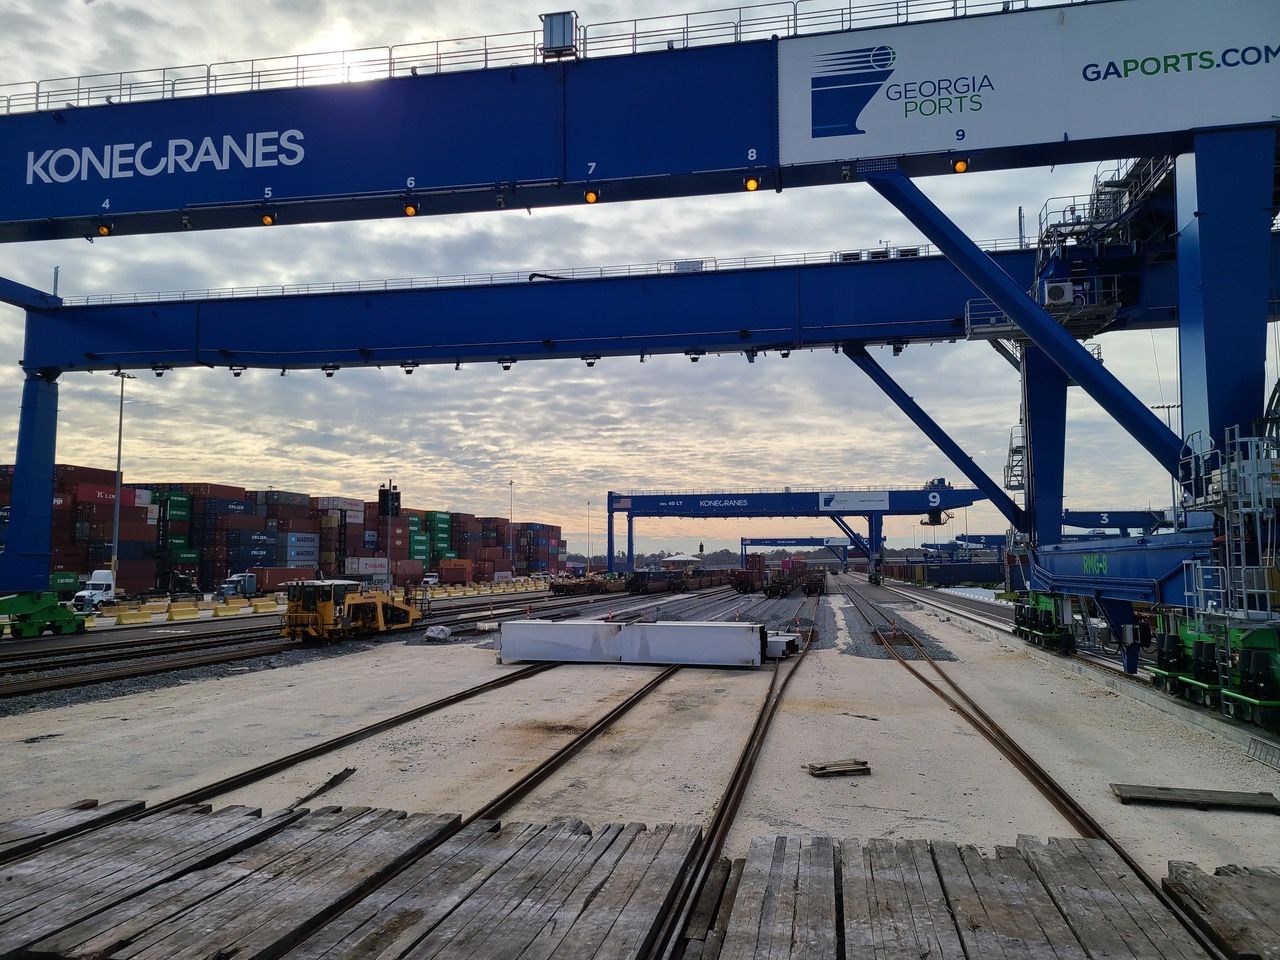 The cranes span 175 ft. over nine rail tracks.